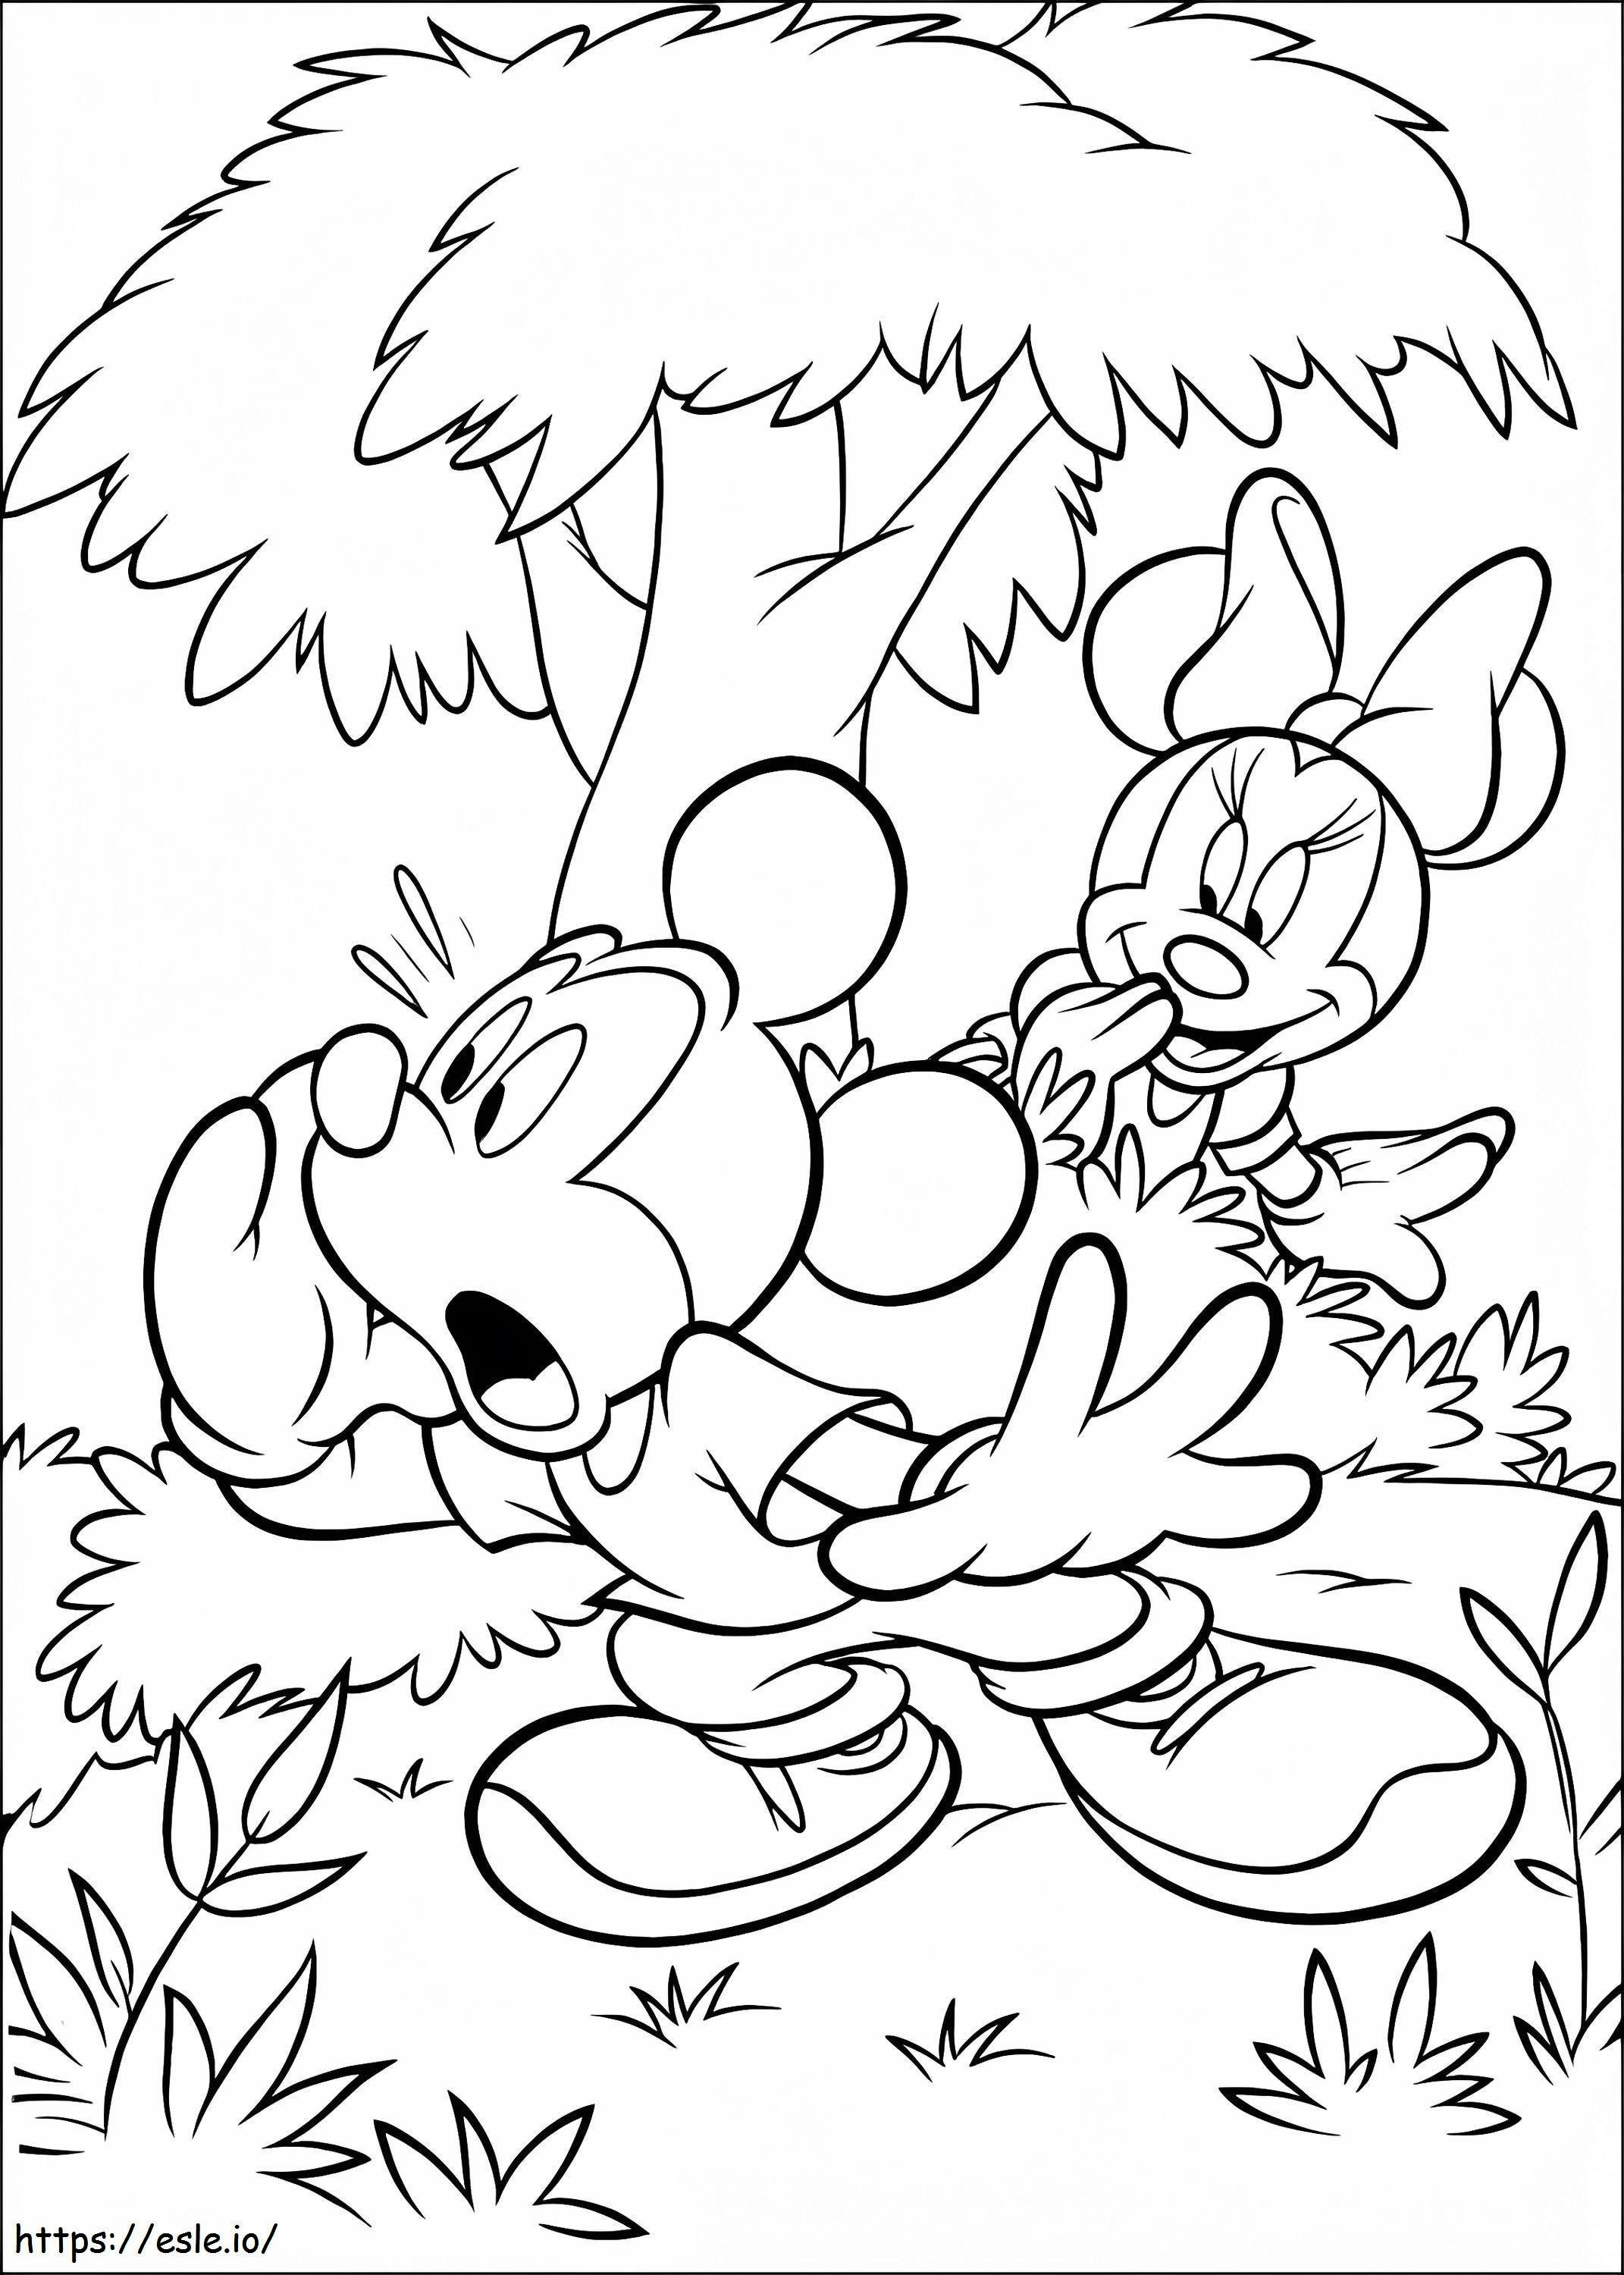 Mickey Minnie'yi Buluyor boyama